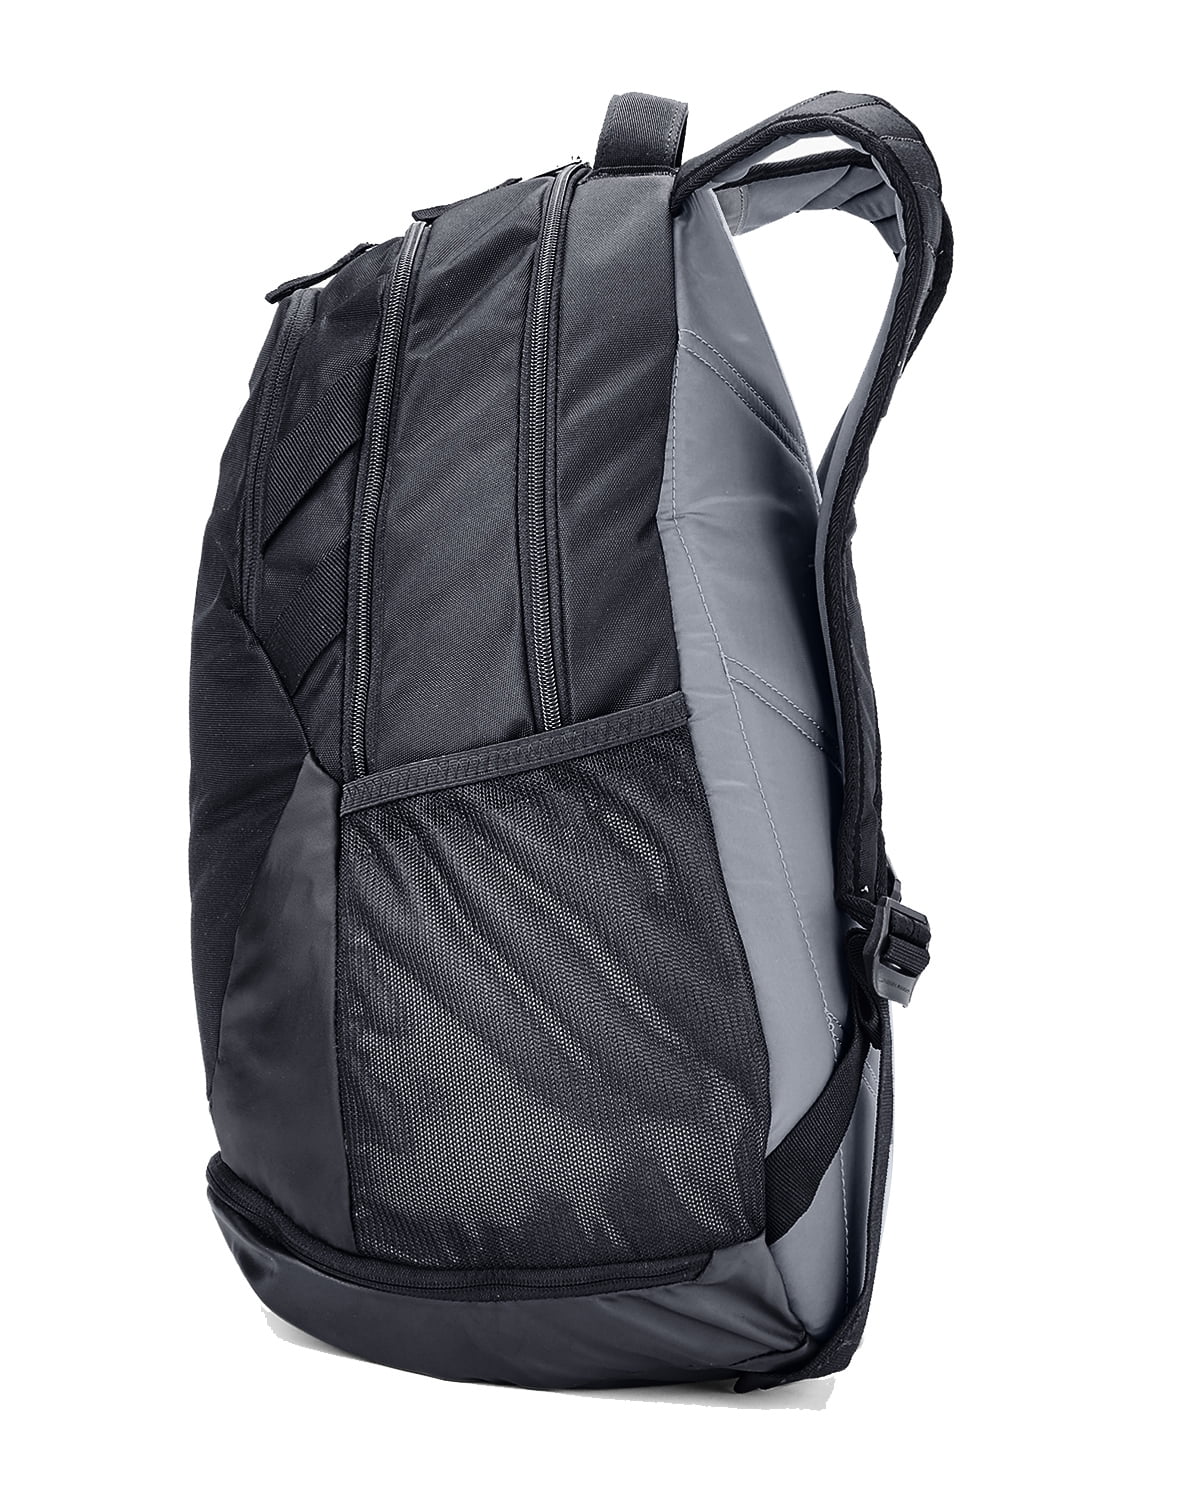 Under #Armour #Hustle UA Storm 3.0 #Backpack #Laptop School Bag